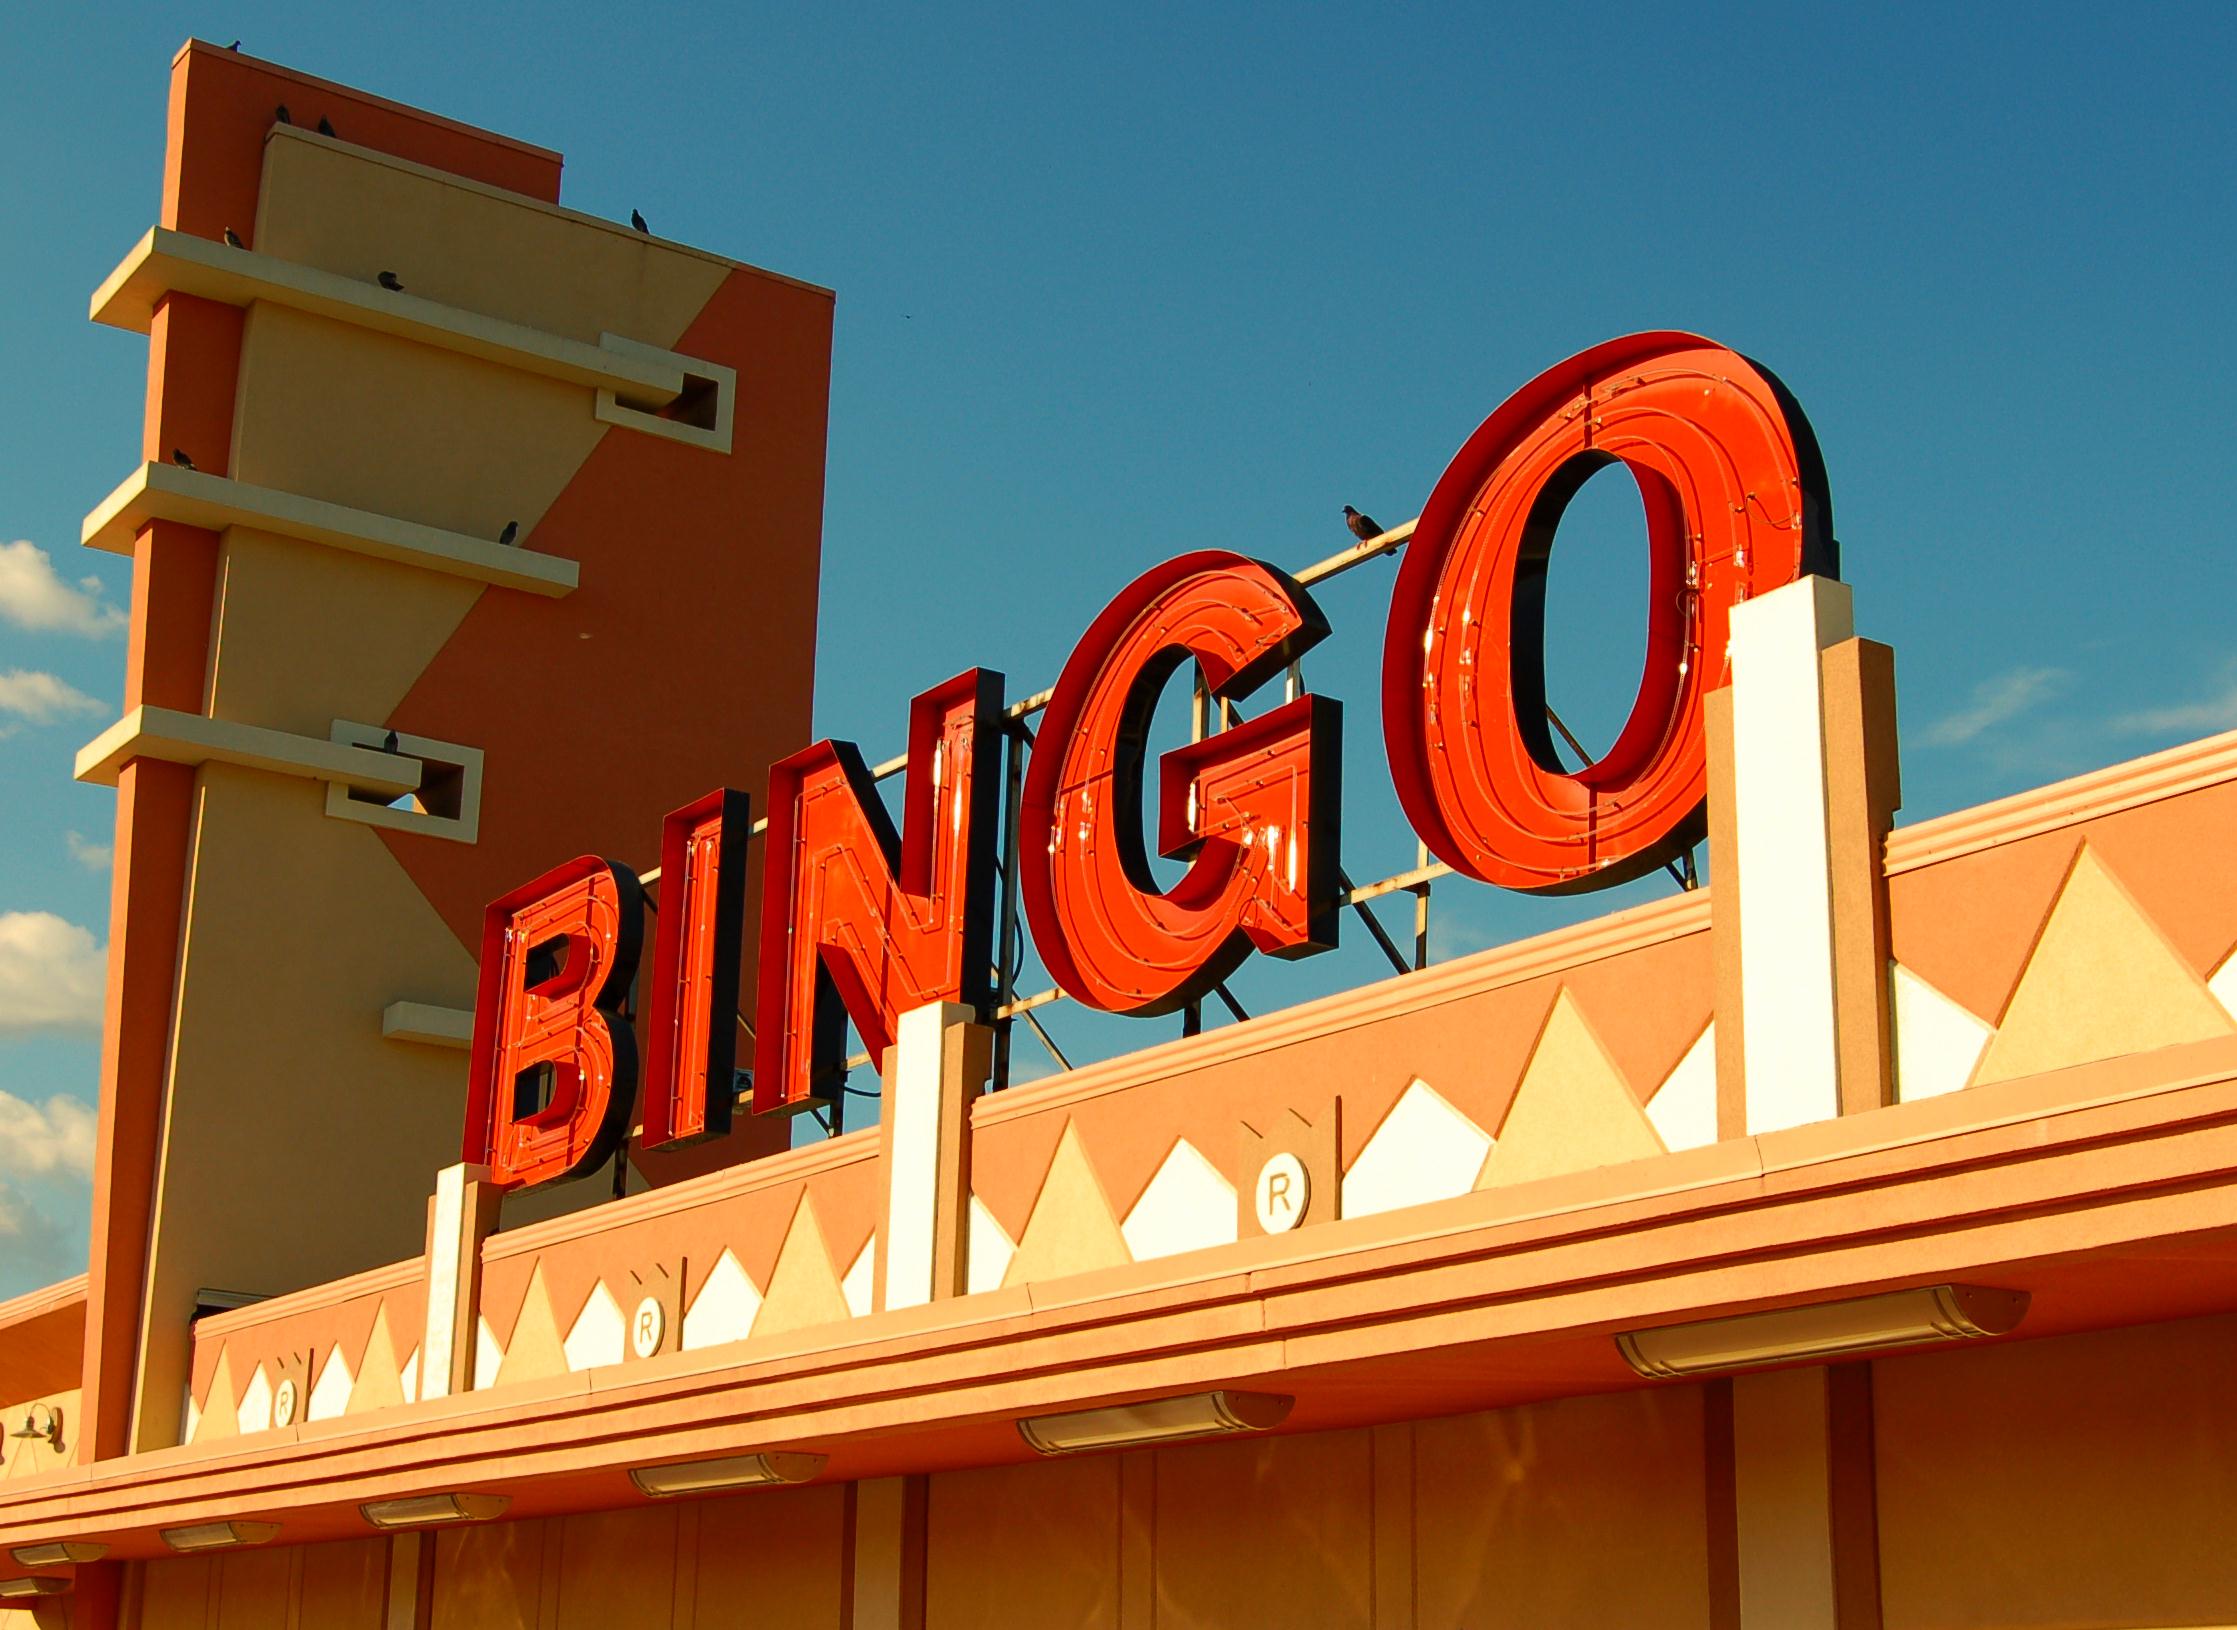 file-bingo-sign-jpg-wikimedia-commons